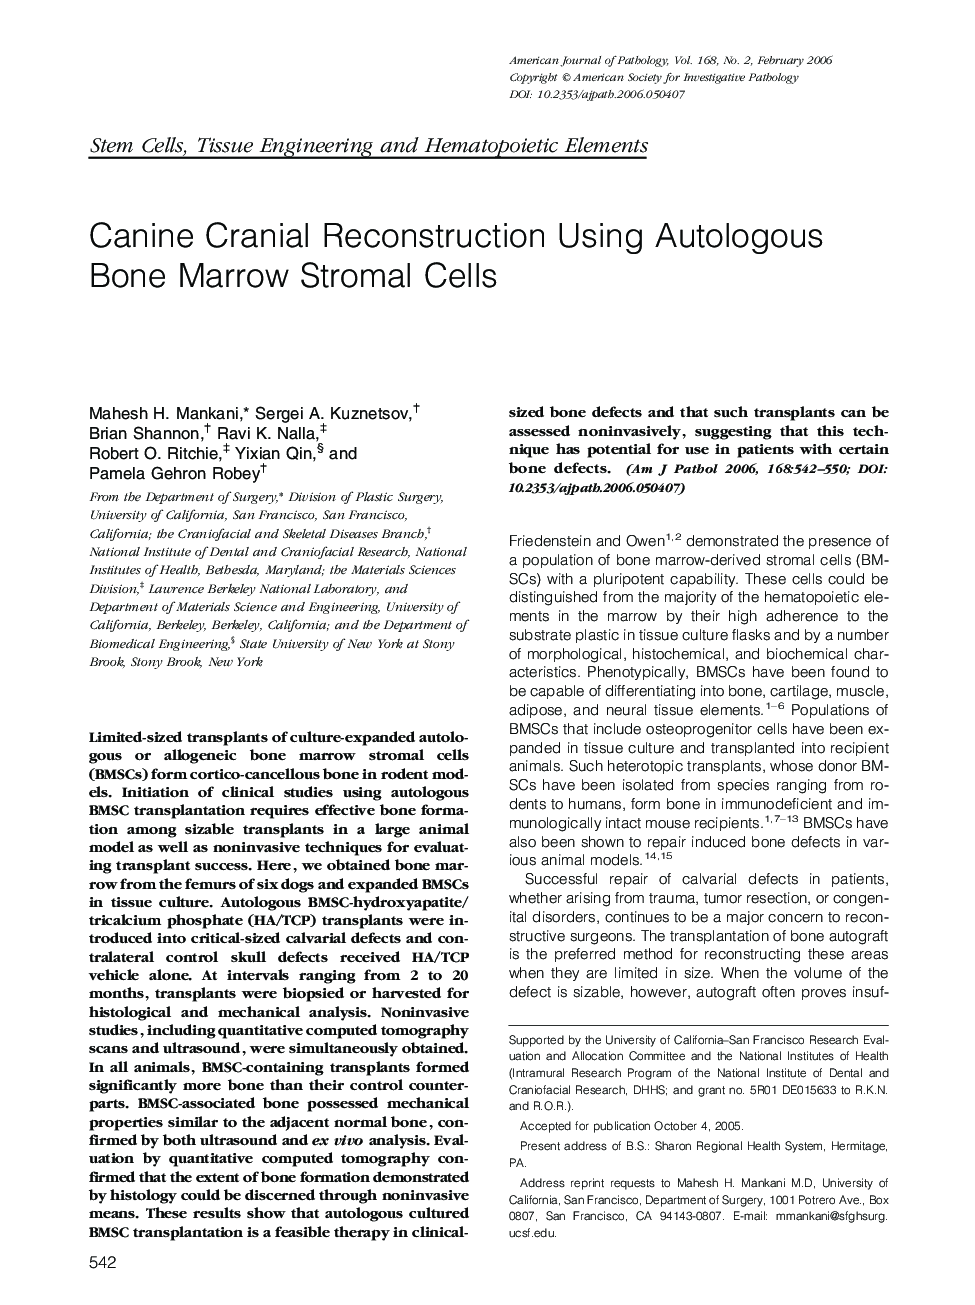 Canine Cranial Reconstruction Using Autologous Bone Marrow Stromal Cells